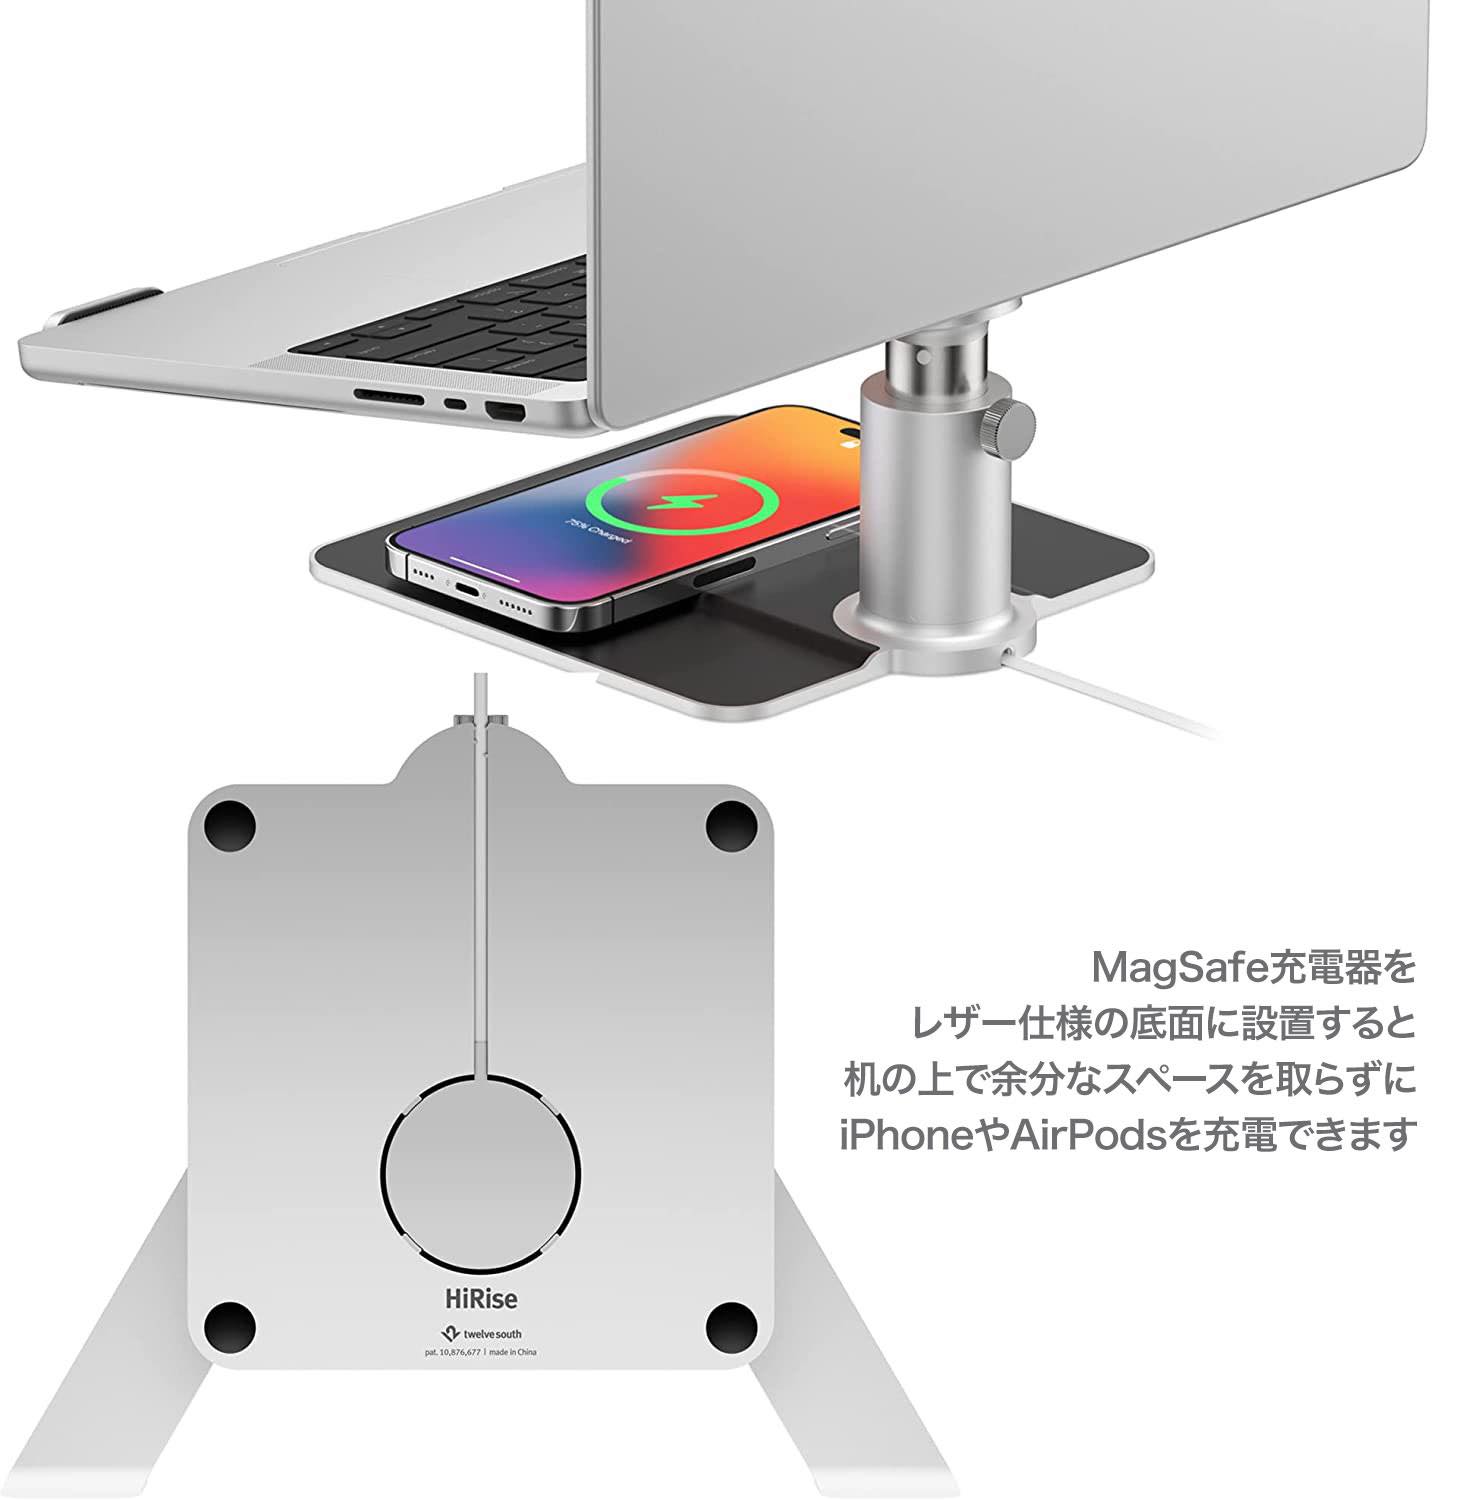 MagSafe充電器でiPhoneなども充電可能なTwelve SouthのMacBook用スタンド｢HiRise Pro for MacBook｣発売